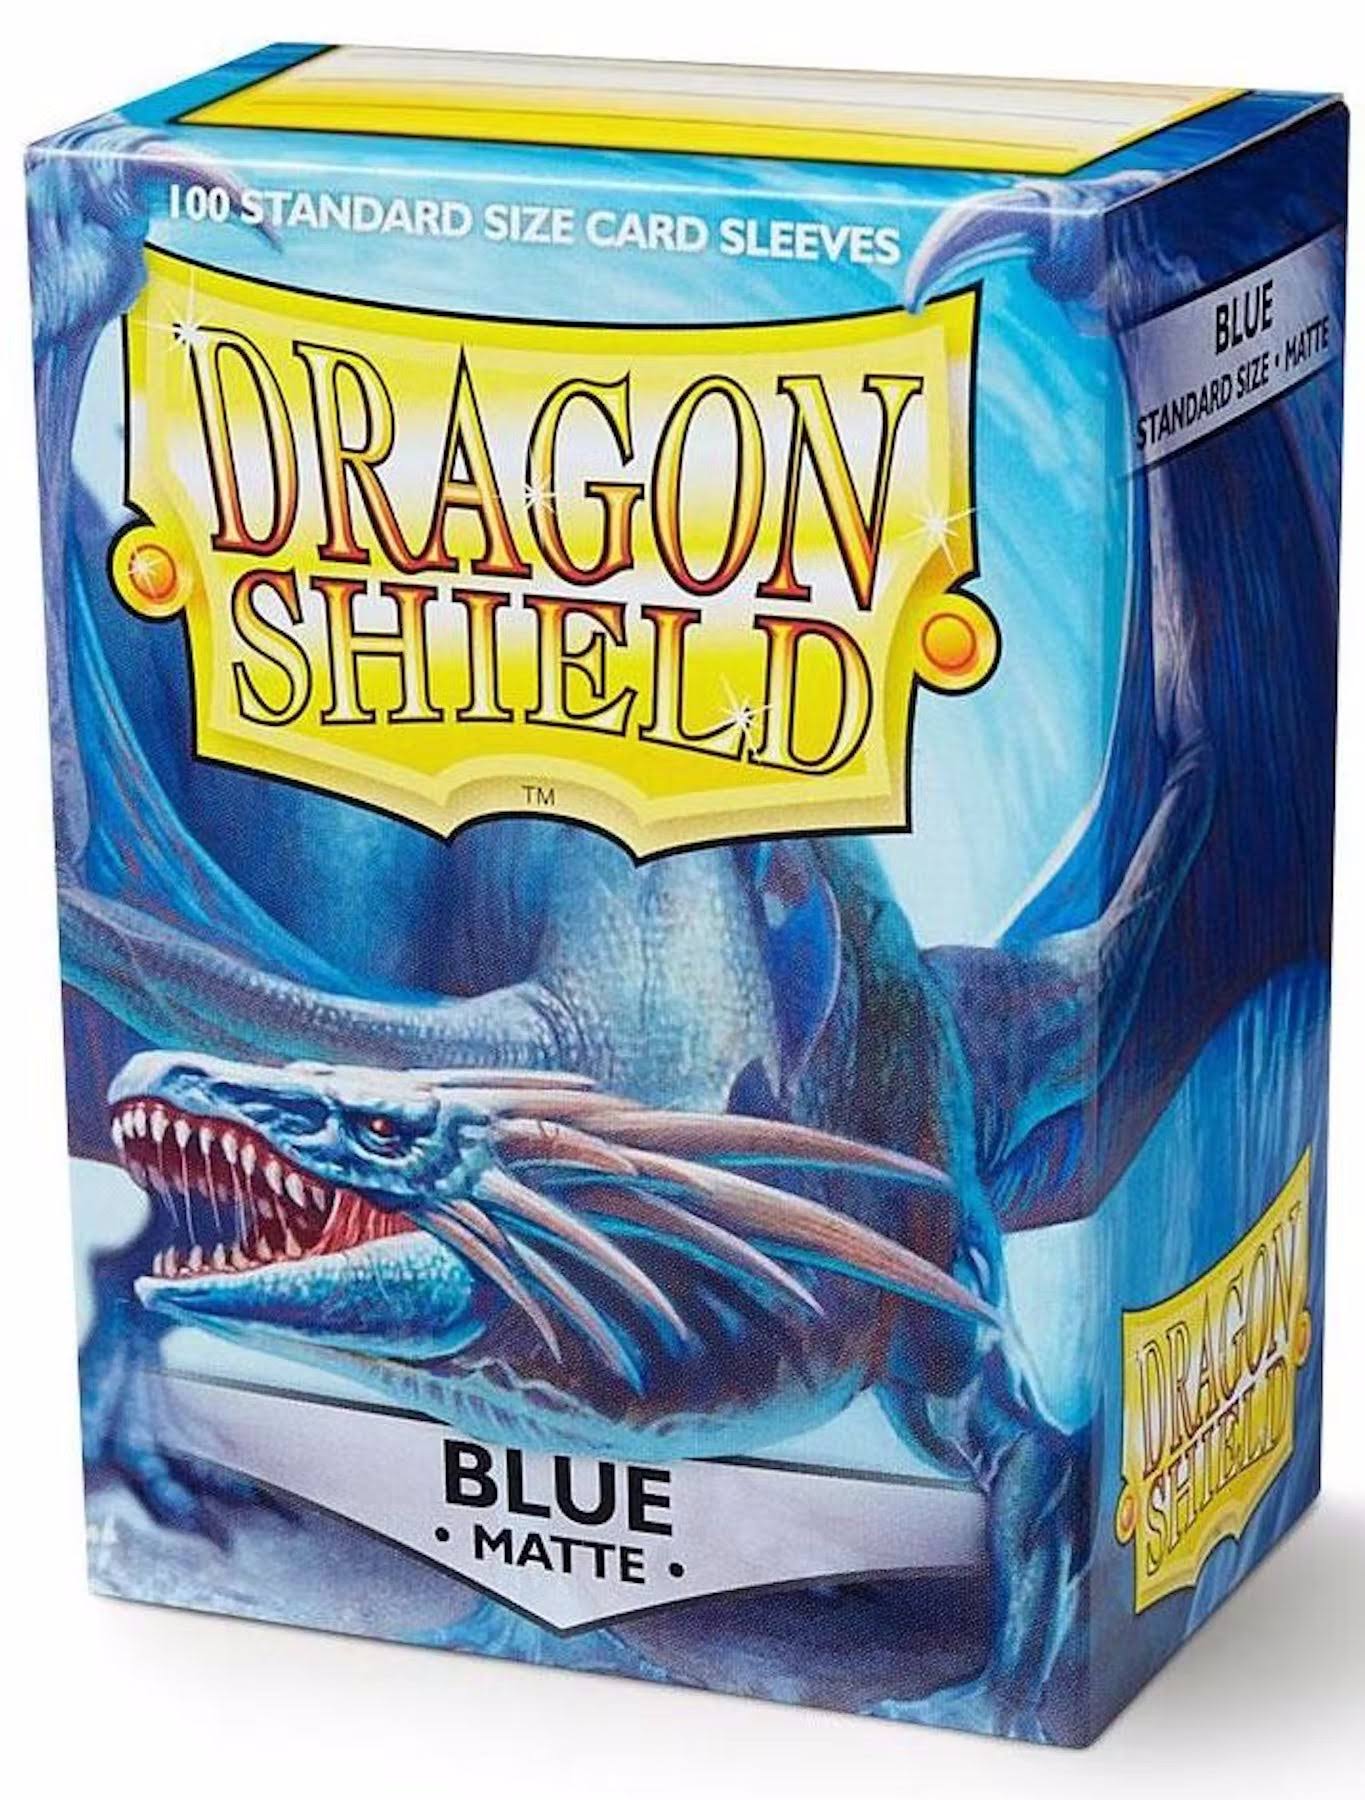 Dragon Shield Card Sleeves - Matte Blue, 100's